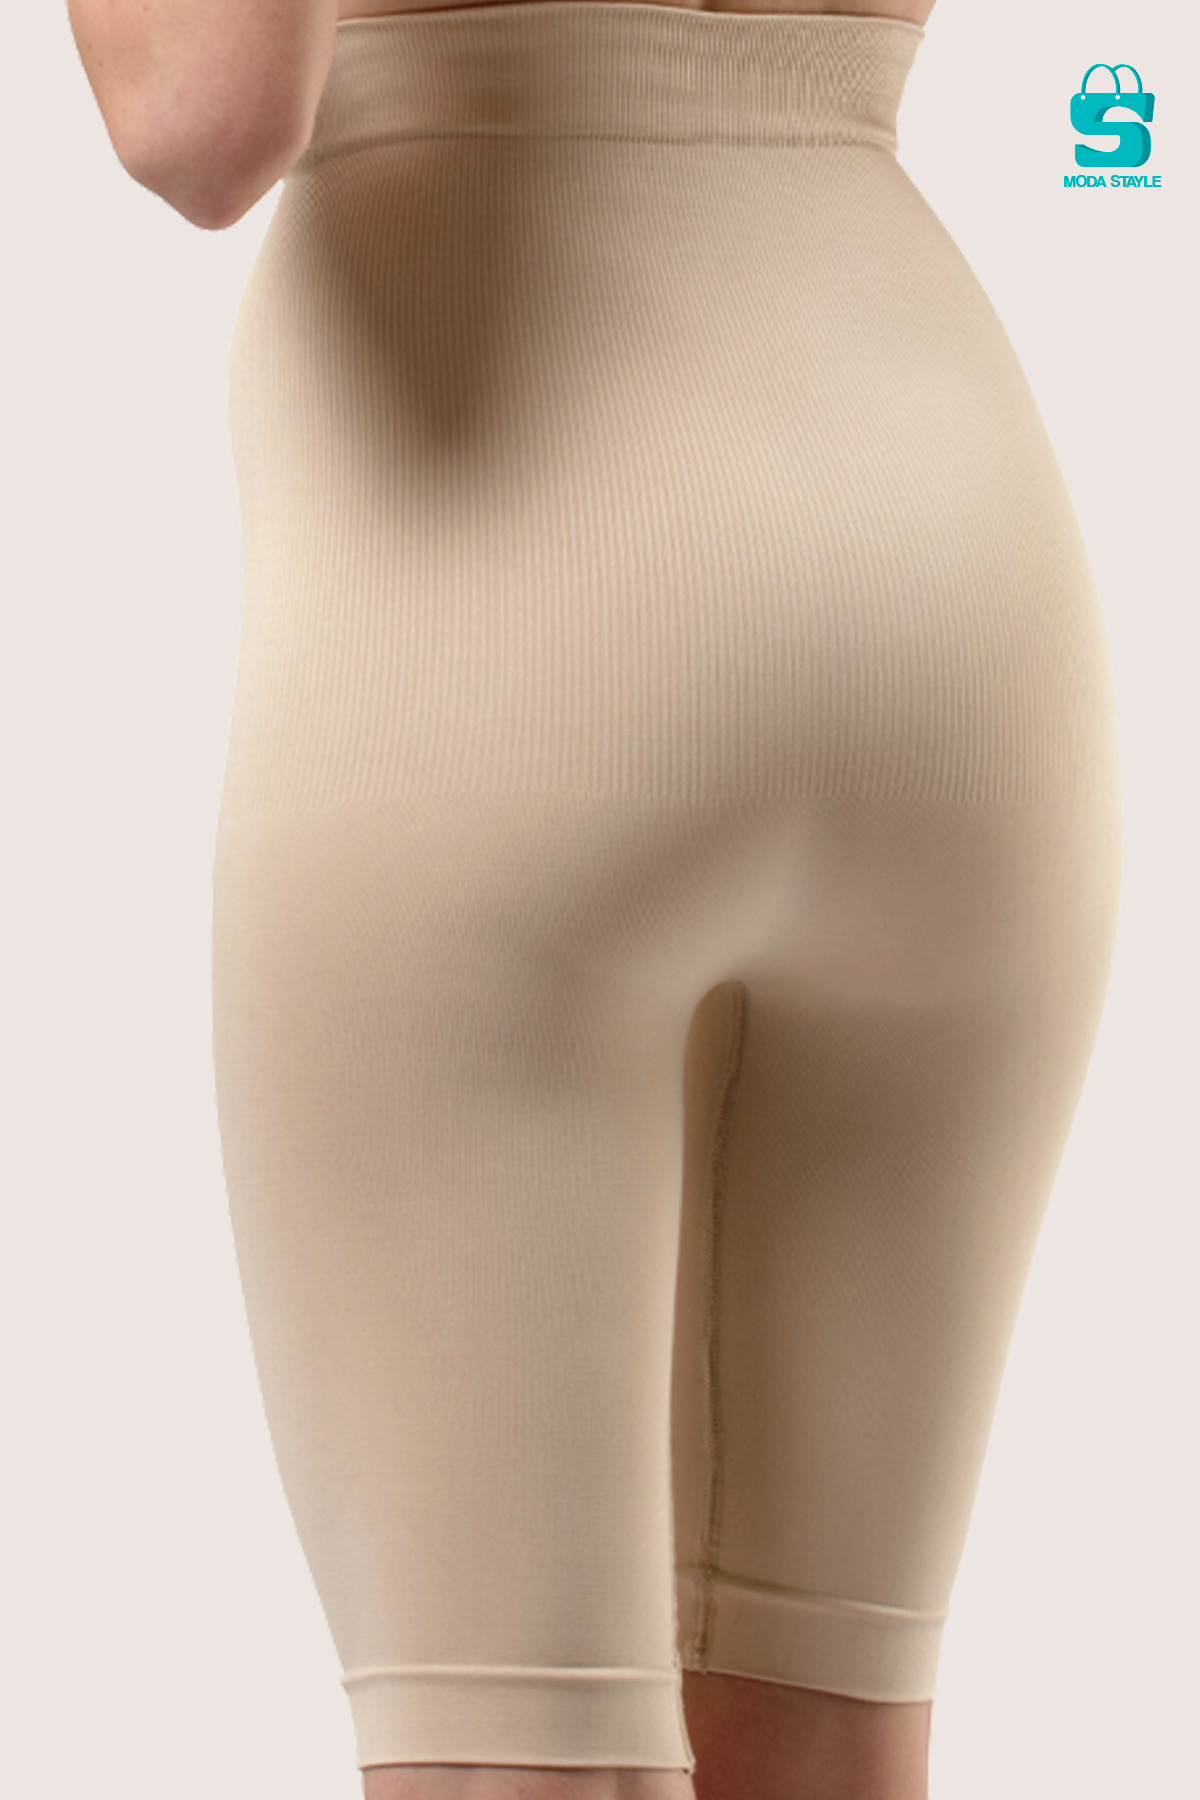 Turkish Bermuda corset for body sculpting - Moda Stayle